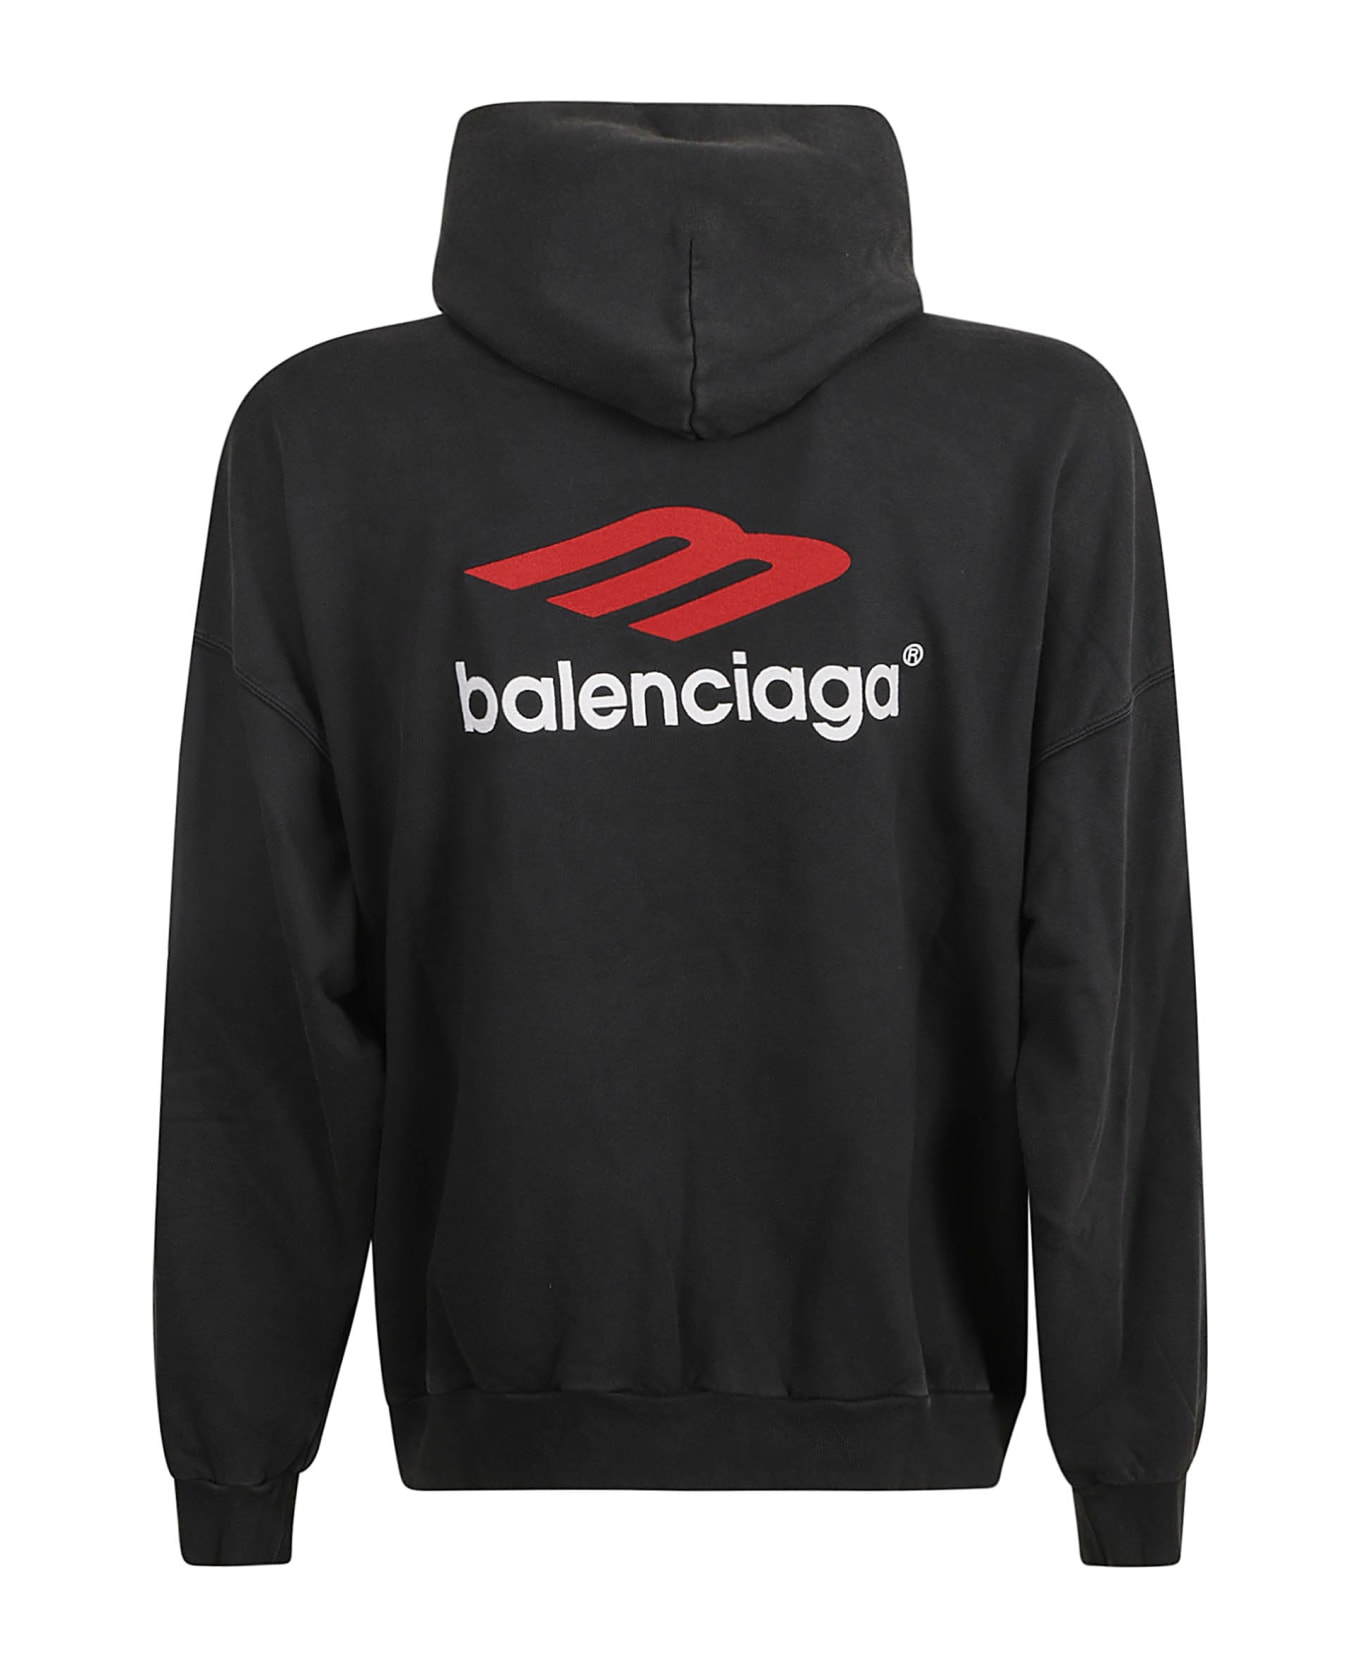 Balenciaga 3b Icon Embroidered Hoodie - Fade Black/red/white フリース